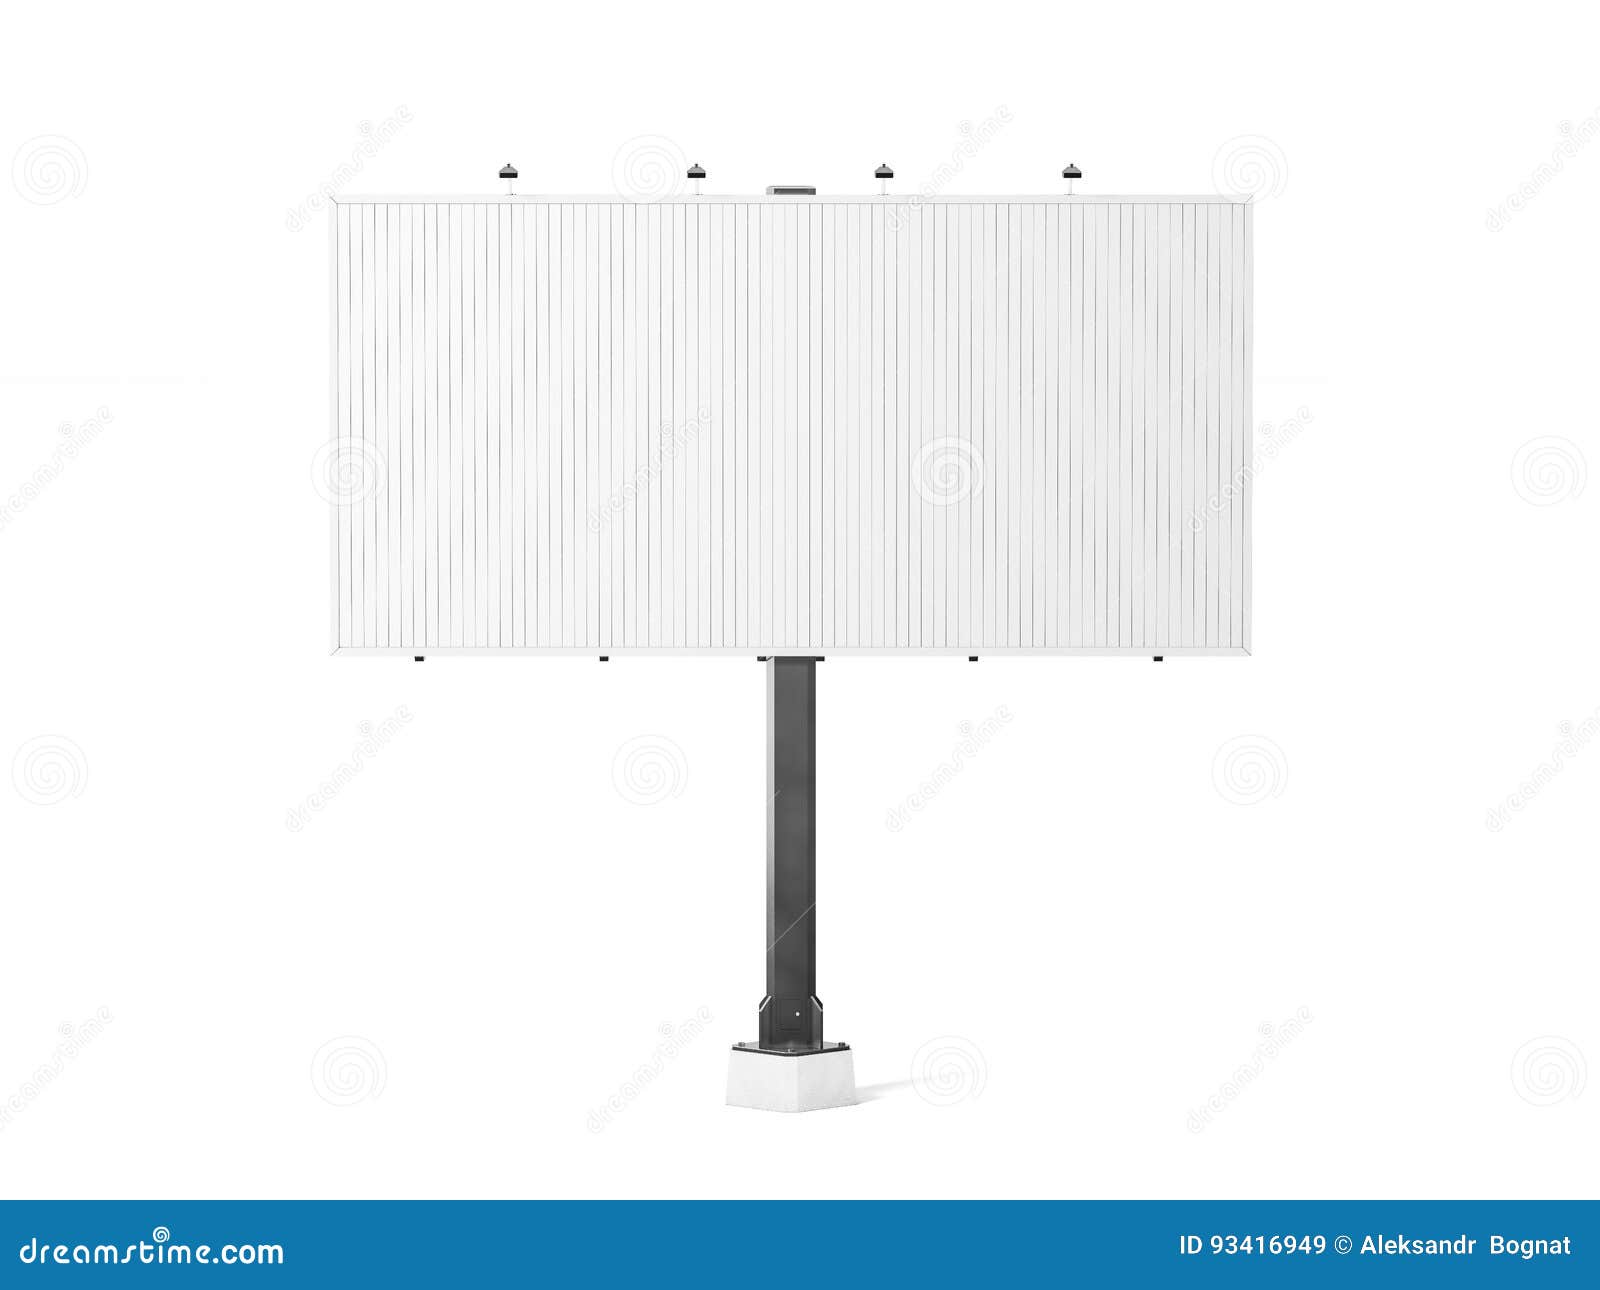 blank white trivision billboard mockup, 3d rendering